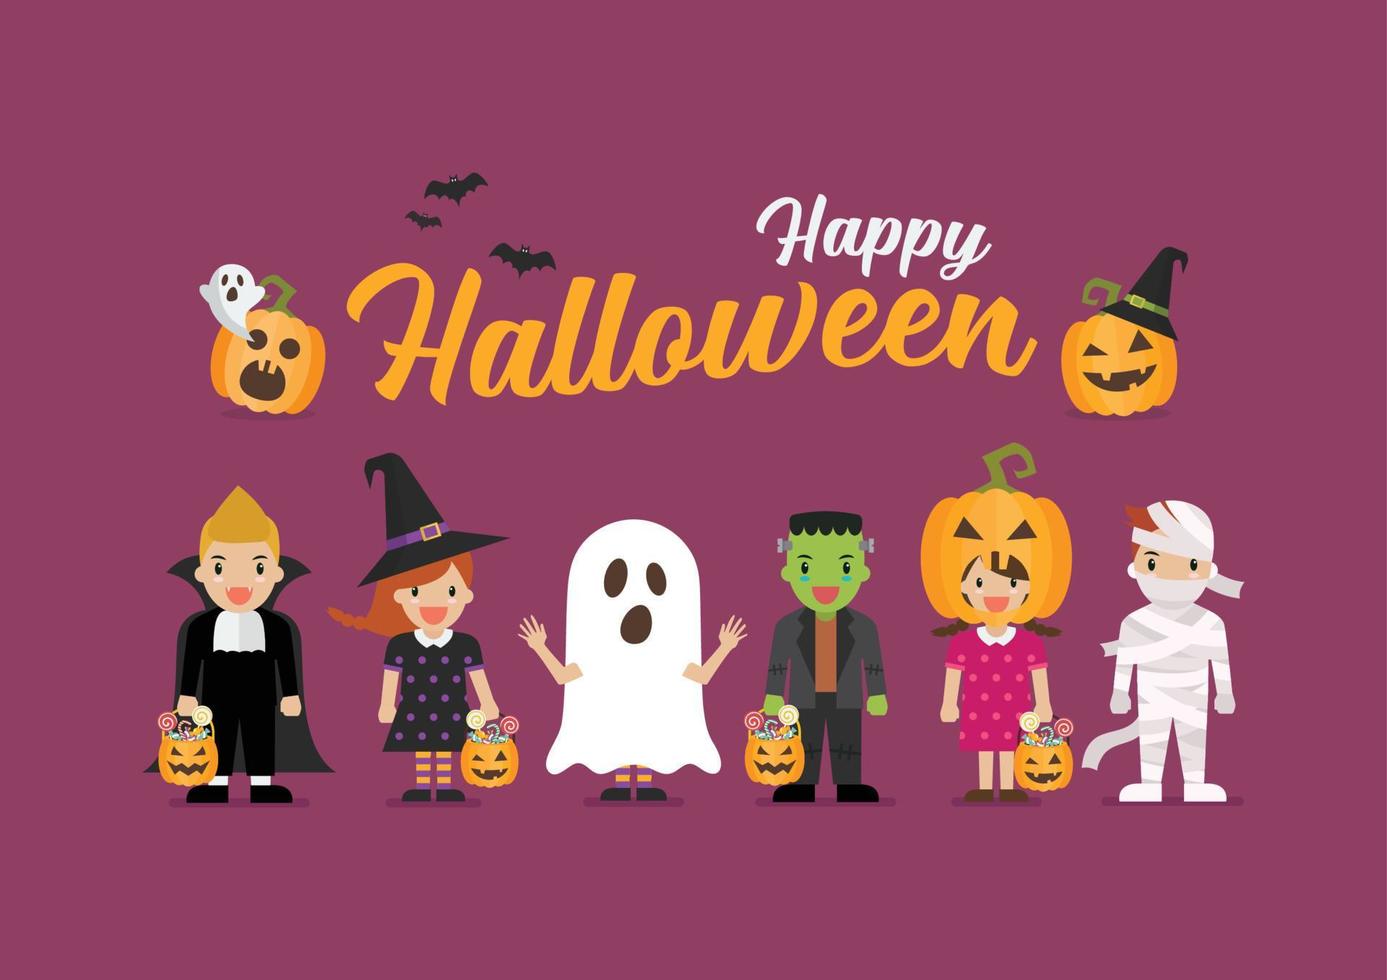 Happy Halloween children in scary different costumes vector